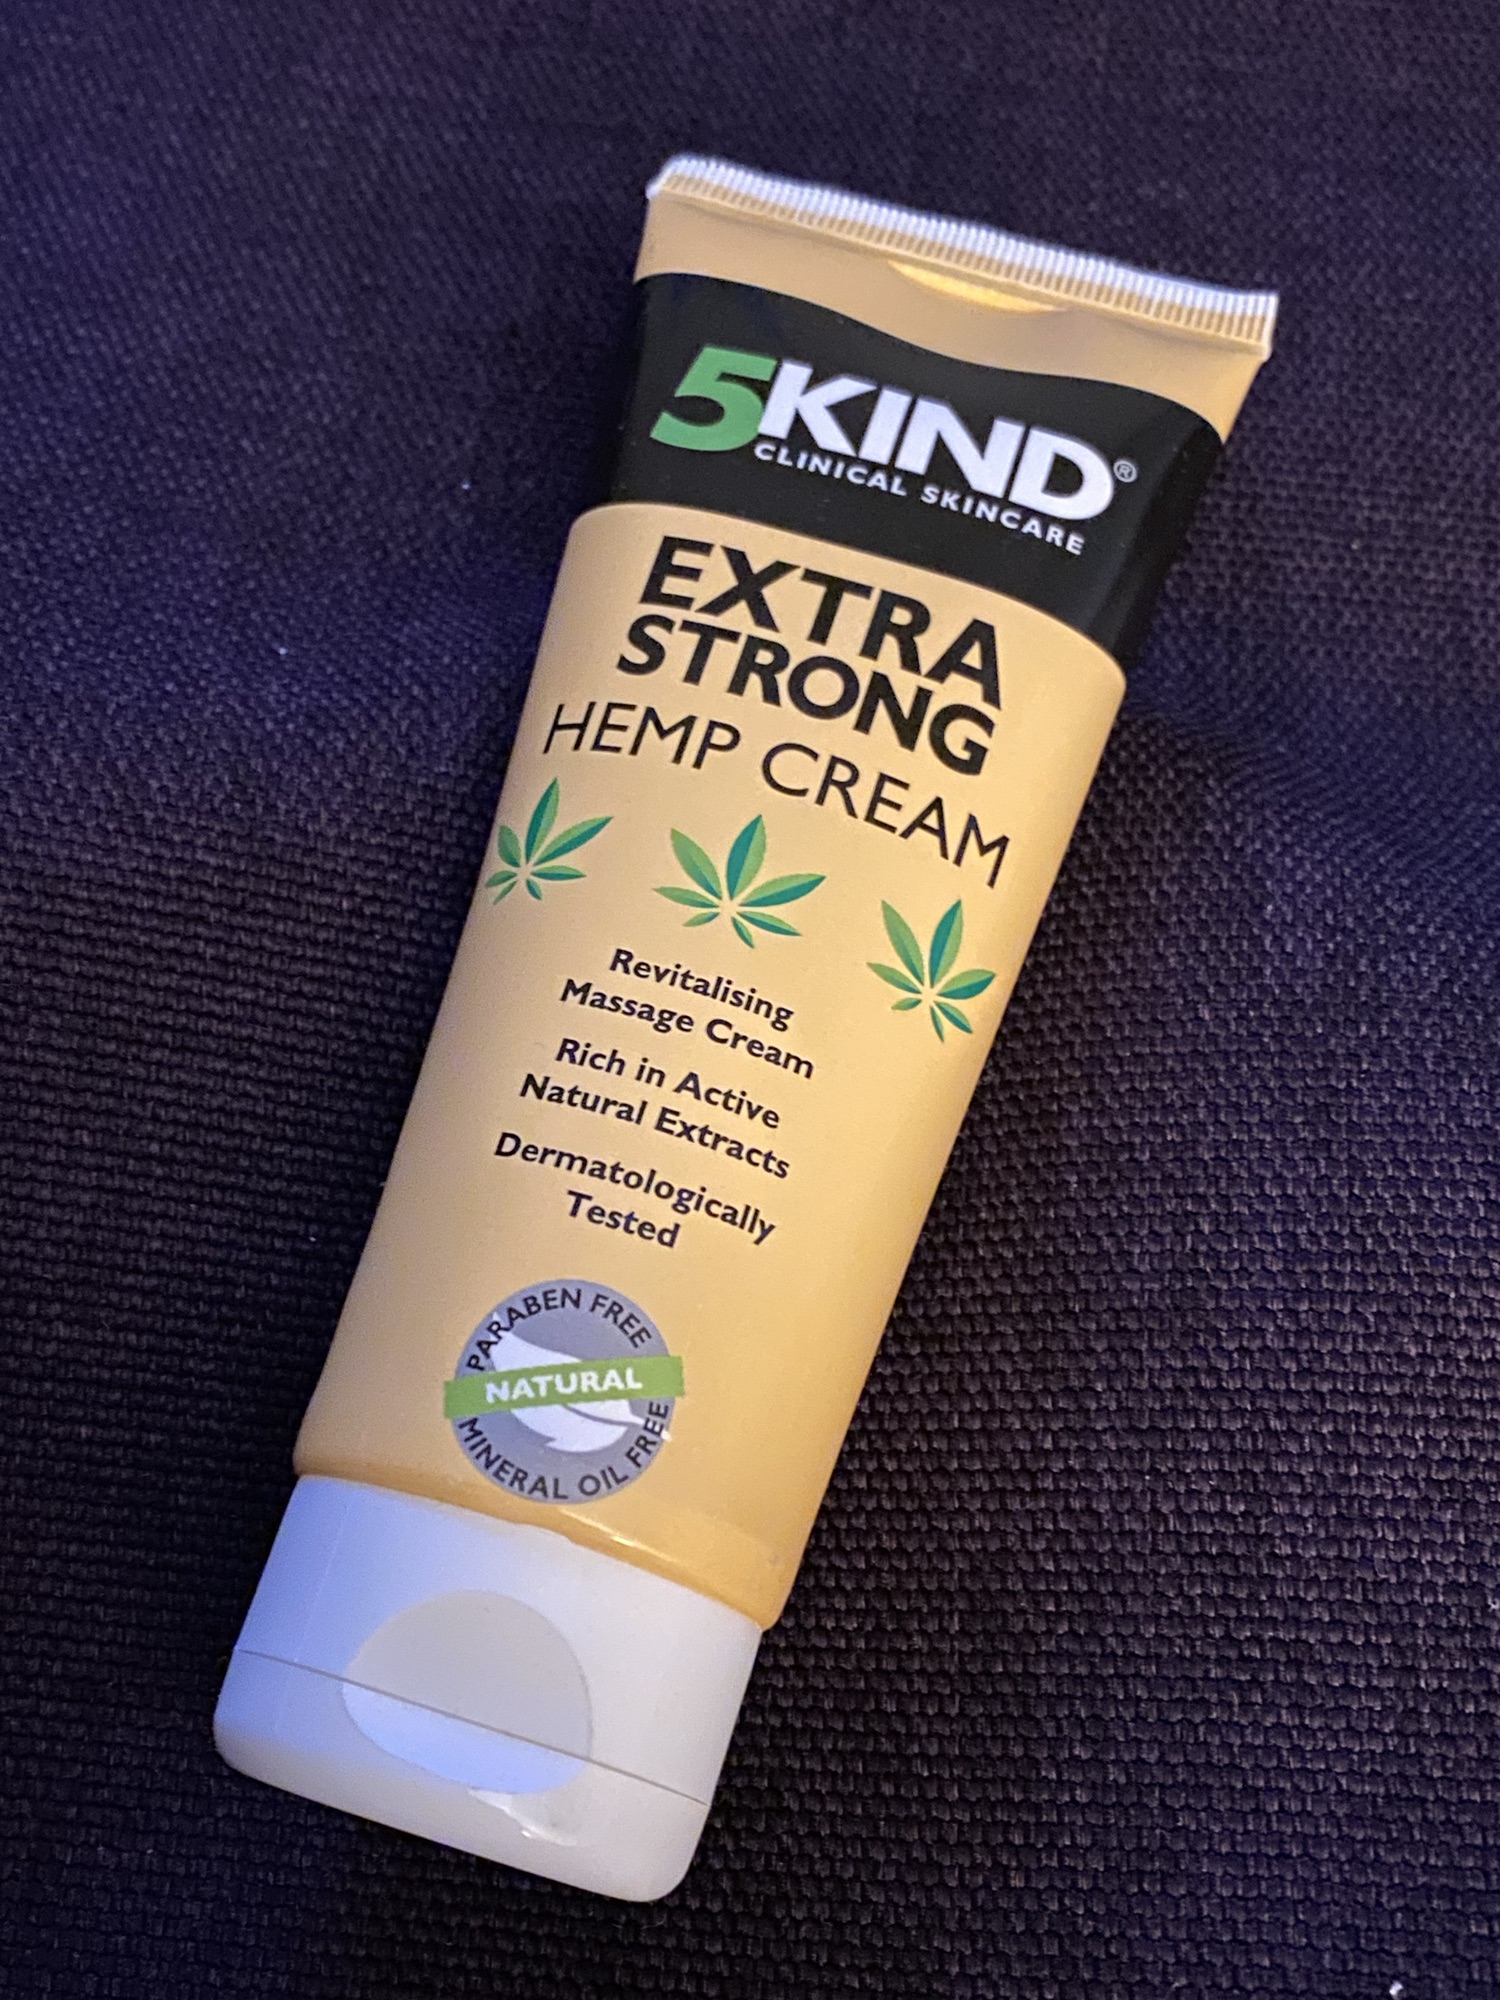 5Kind Extra strong hemp cream